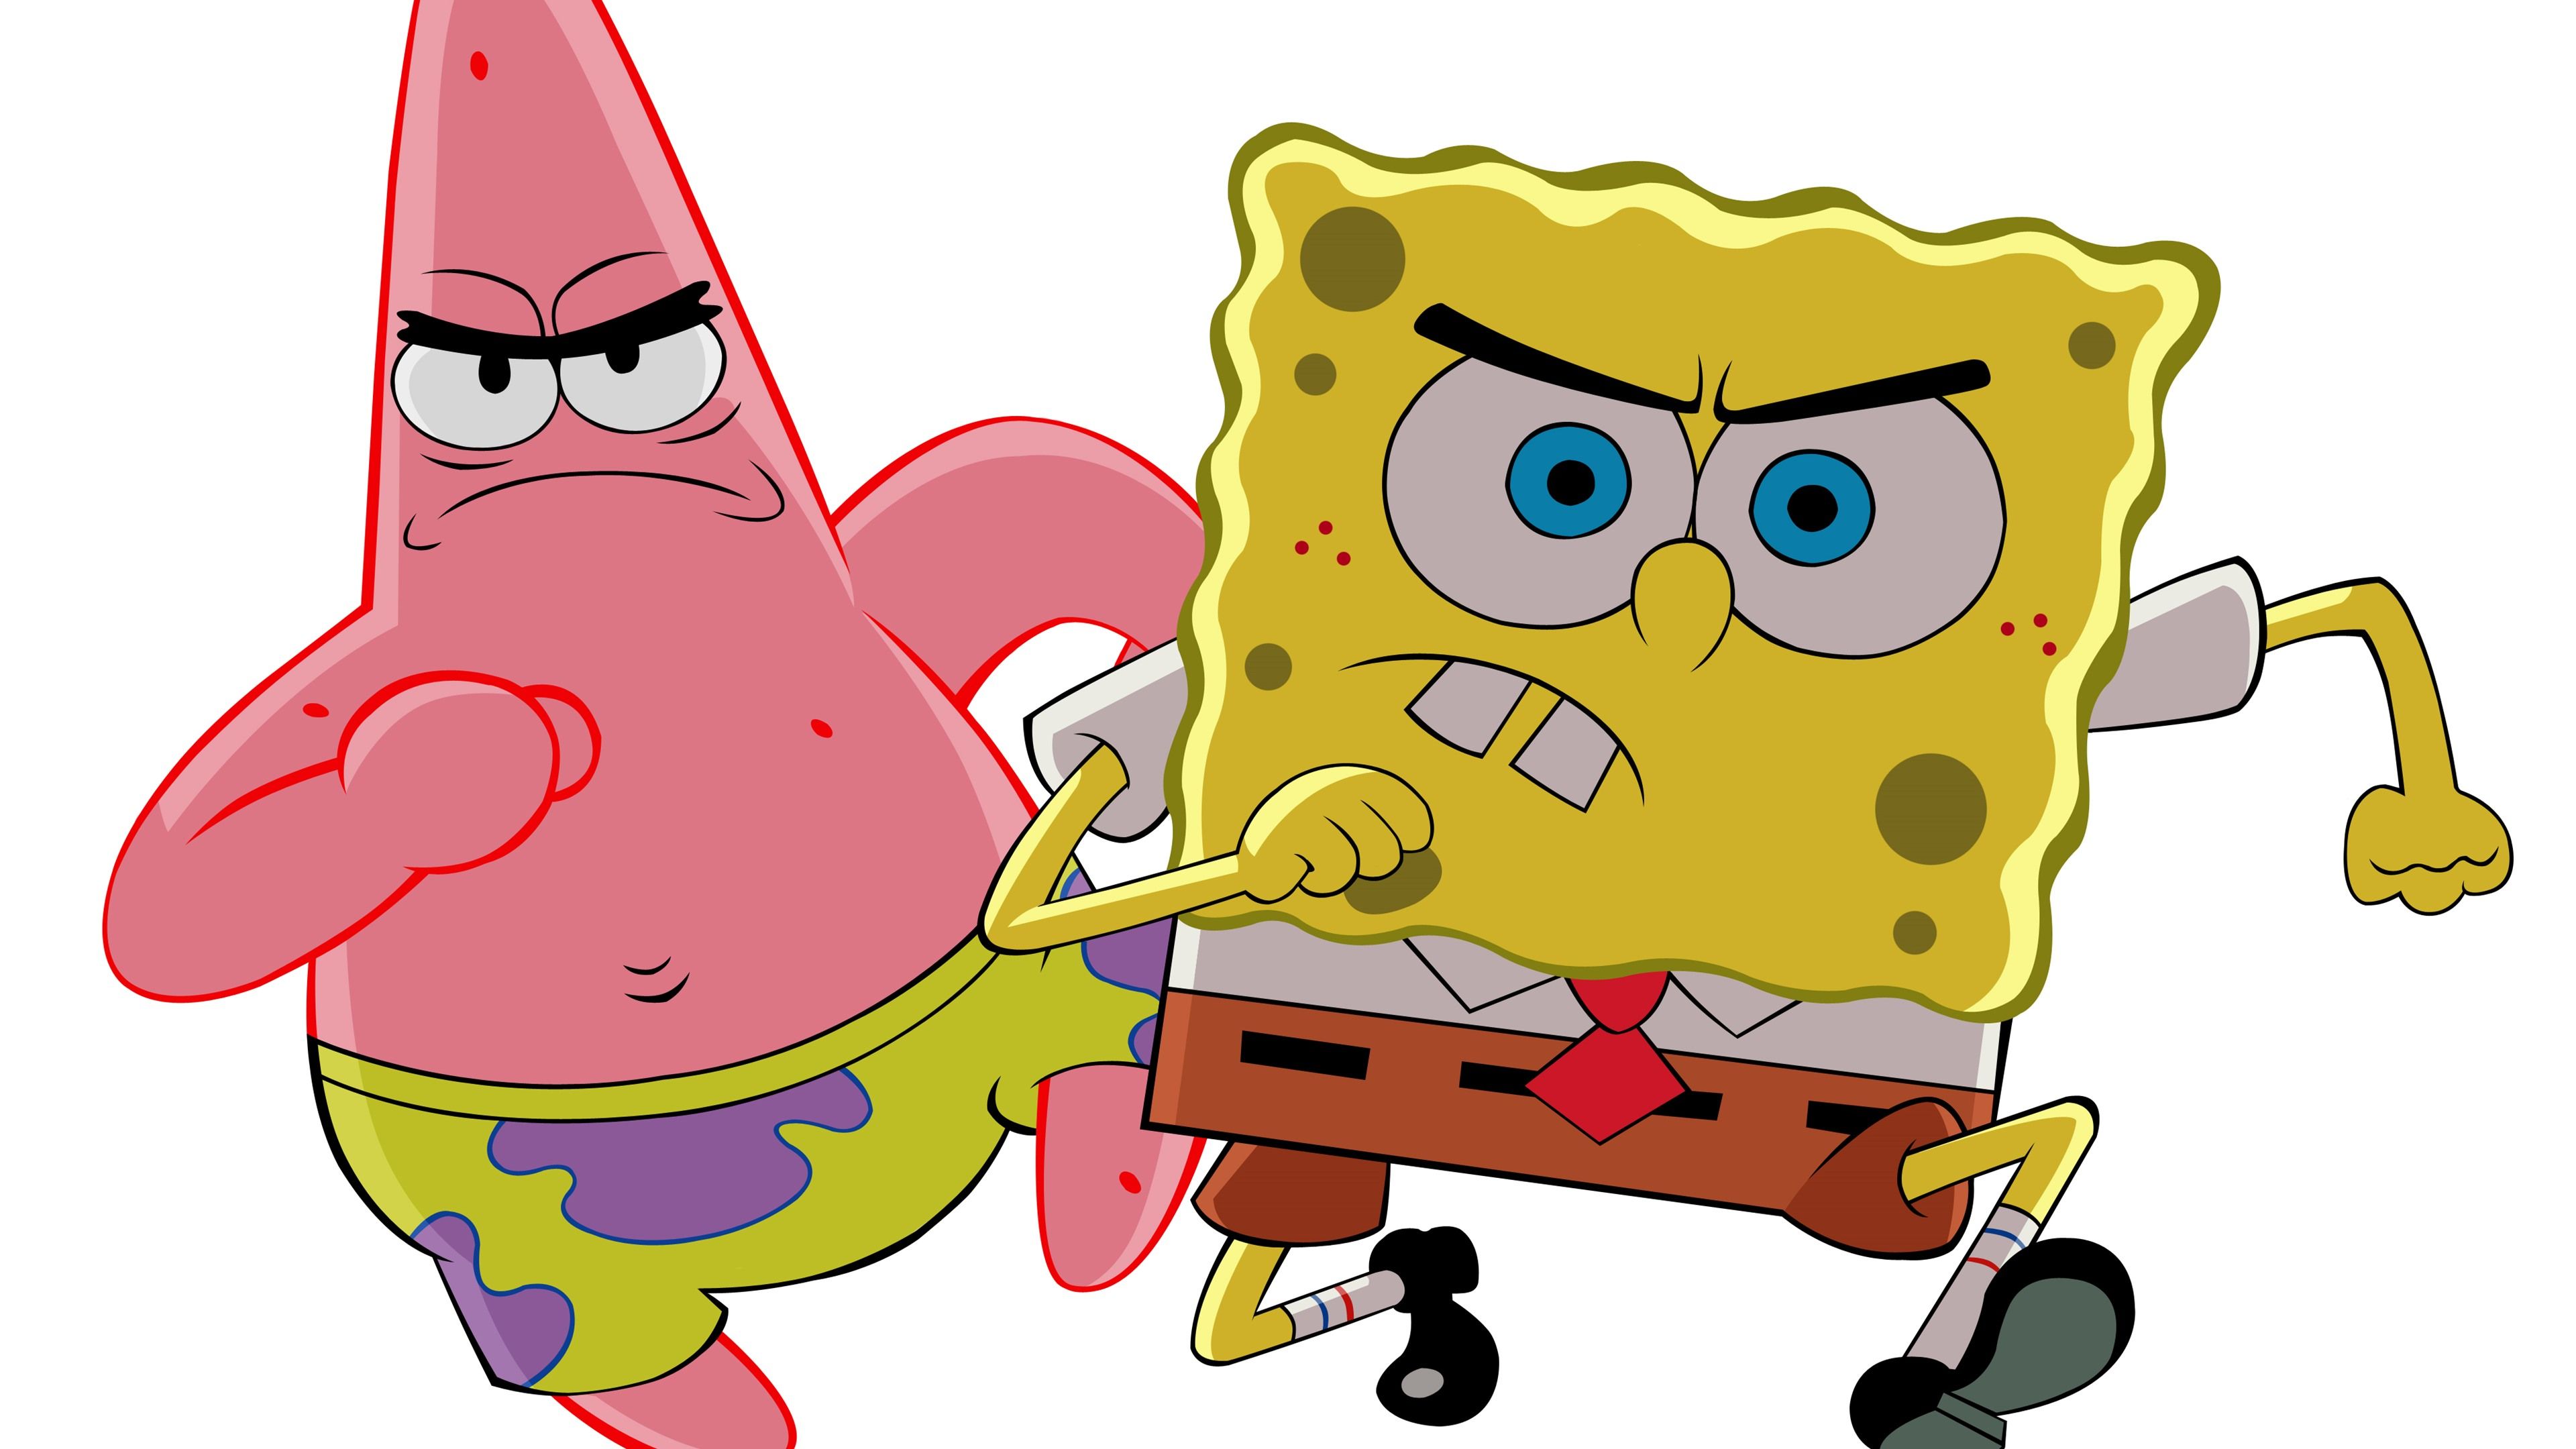 Spongebob And Patrick As Anime